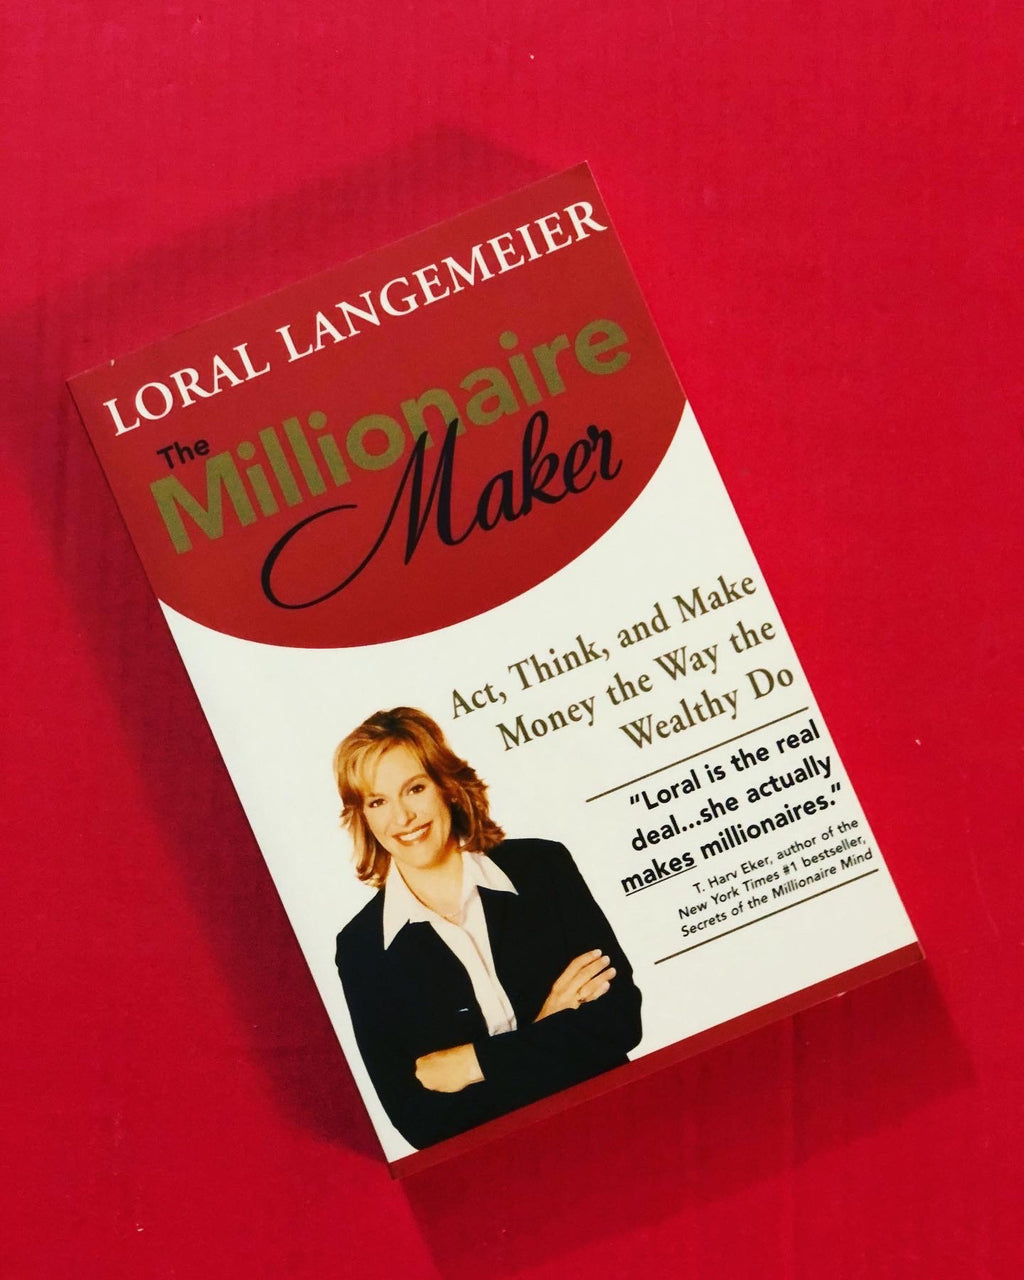 The Millionaire Maker- By Loral Langemeier